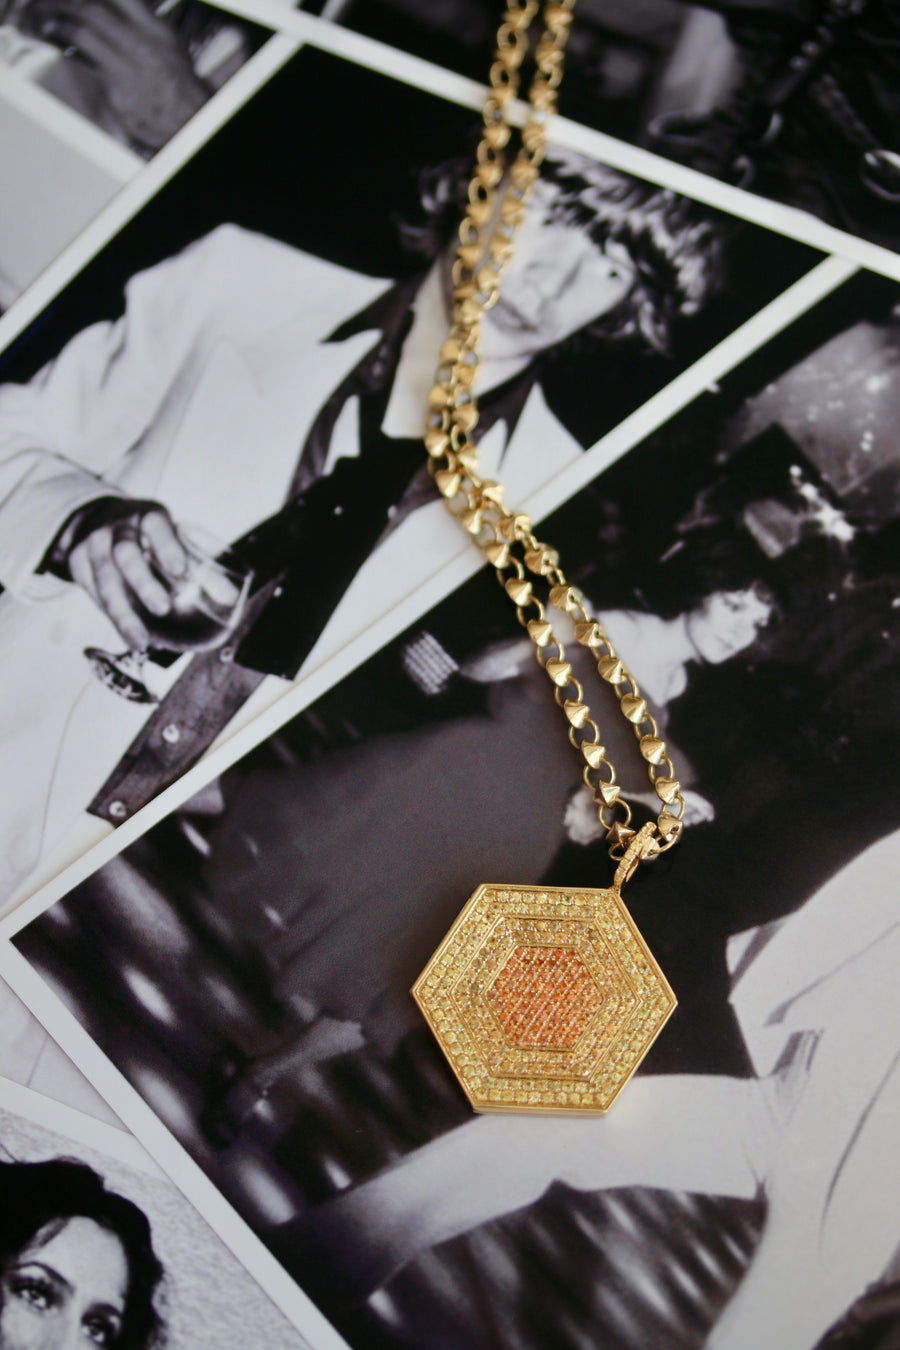 18k gold and yellow sapphire hexagonal locket pendant